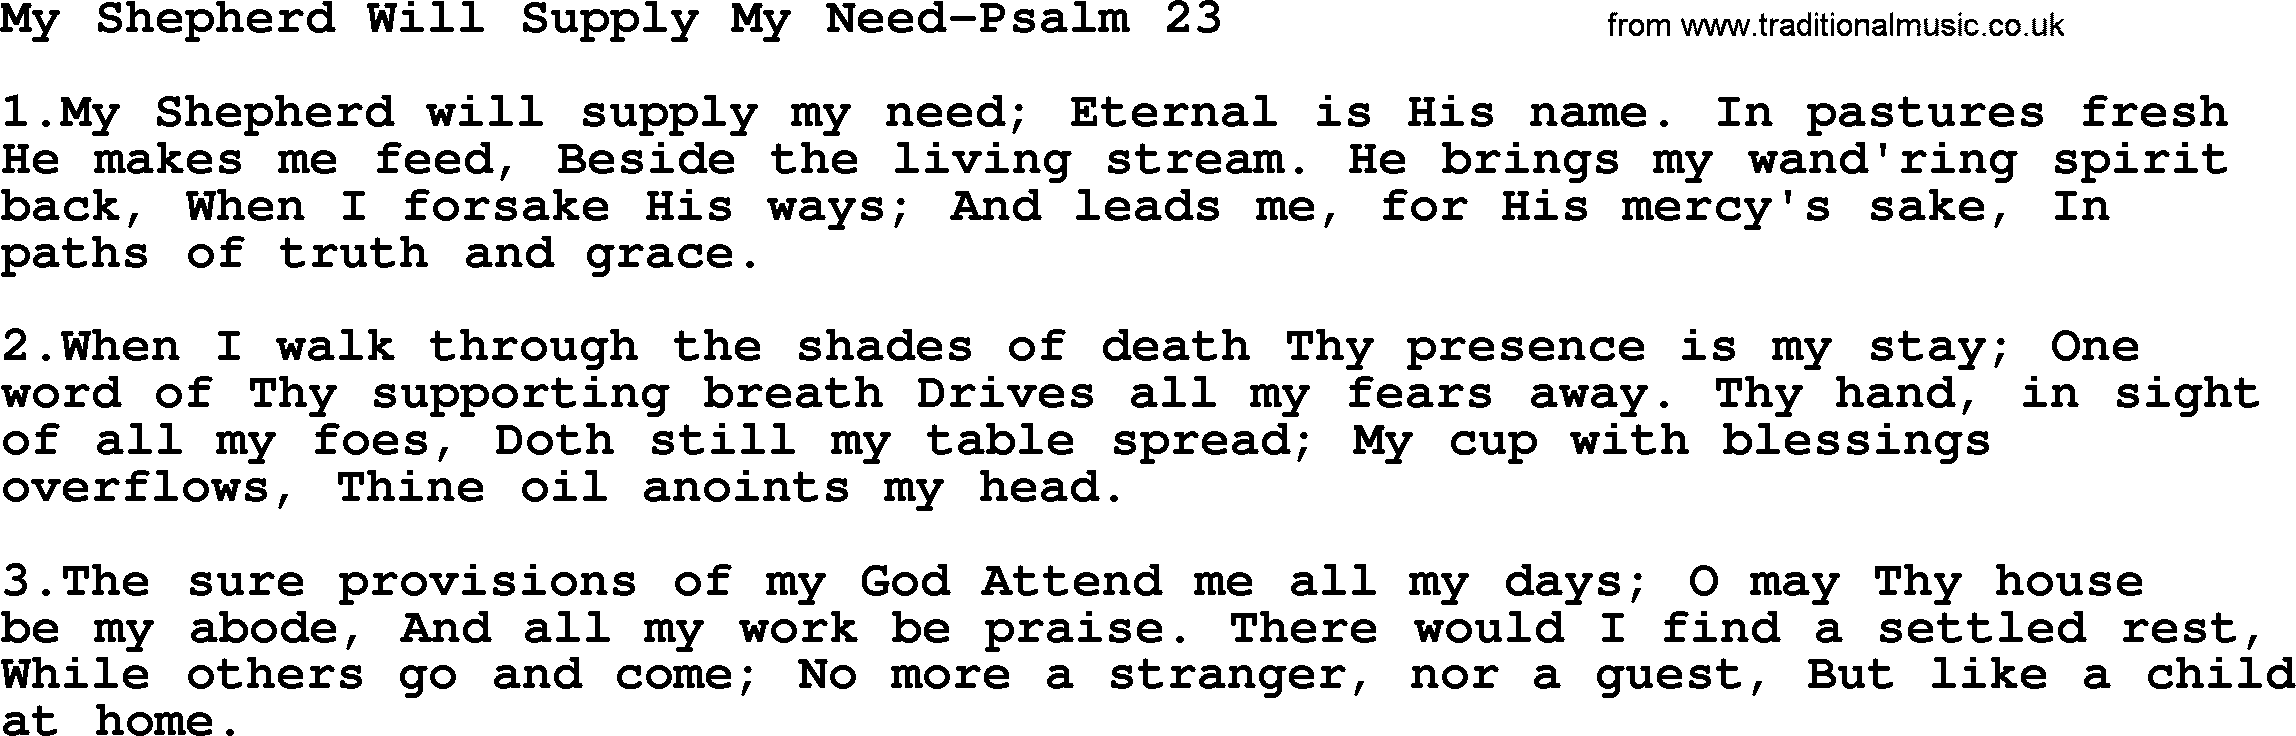 Hymns from the Psalms, Hymn: My Shepherd Will Supply My Need-Psalm 23, lyrics with PDF